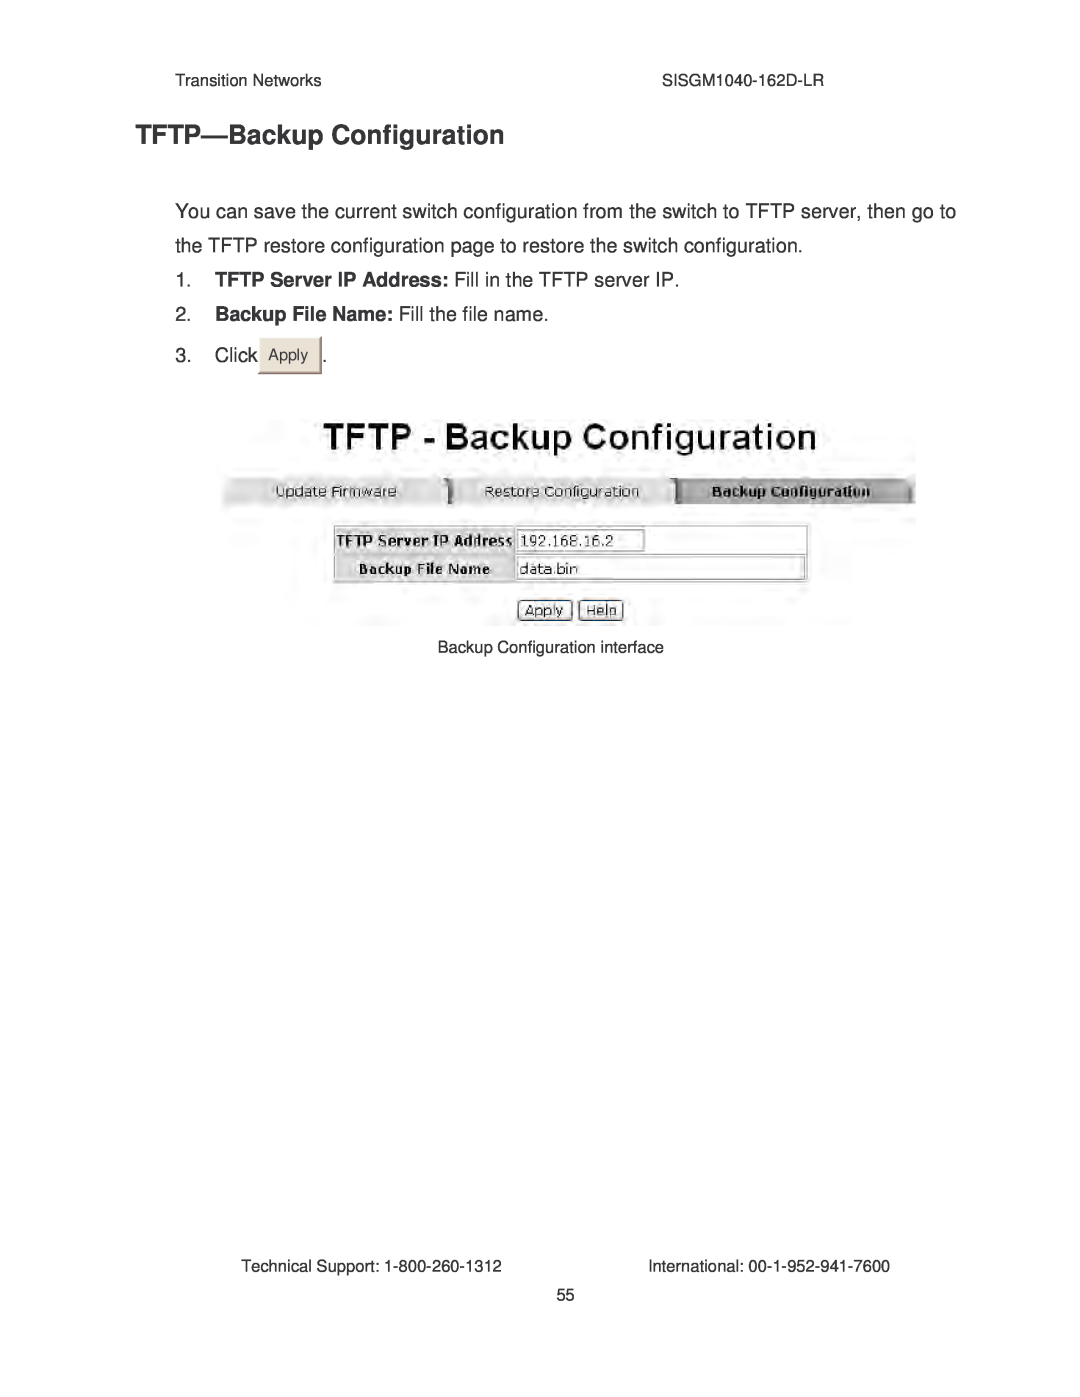 Transition Networks manual TFTP-Backup Configuration, Transition Networks, SISGM1040-162D-LR, Apply, Technical Support 